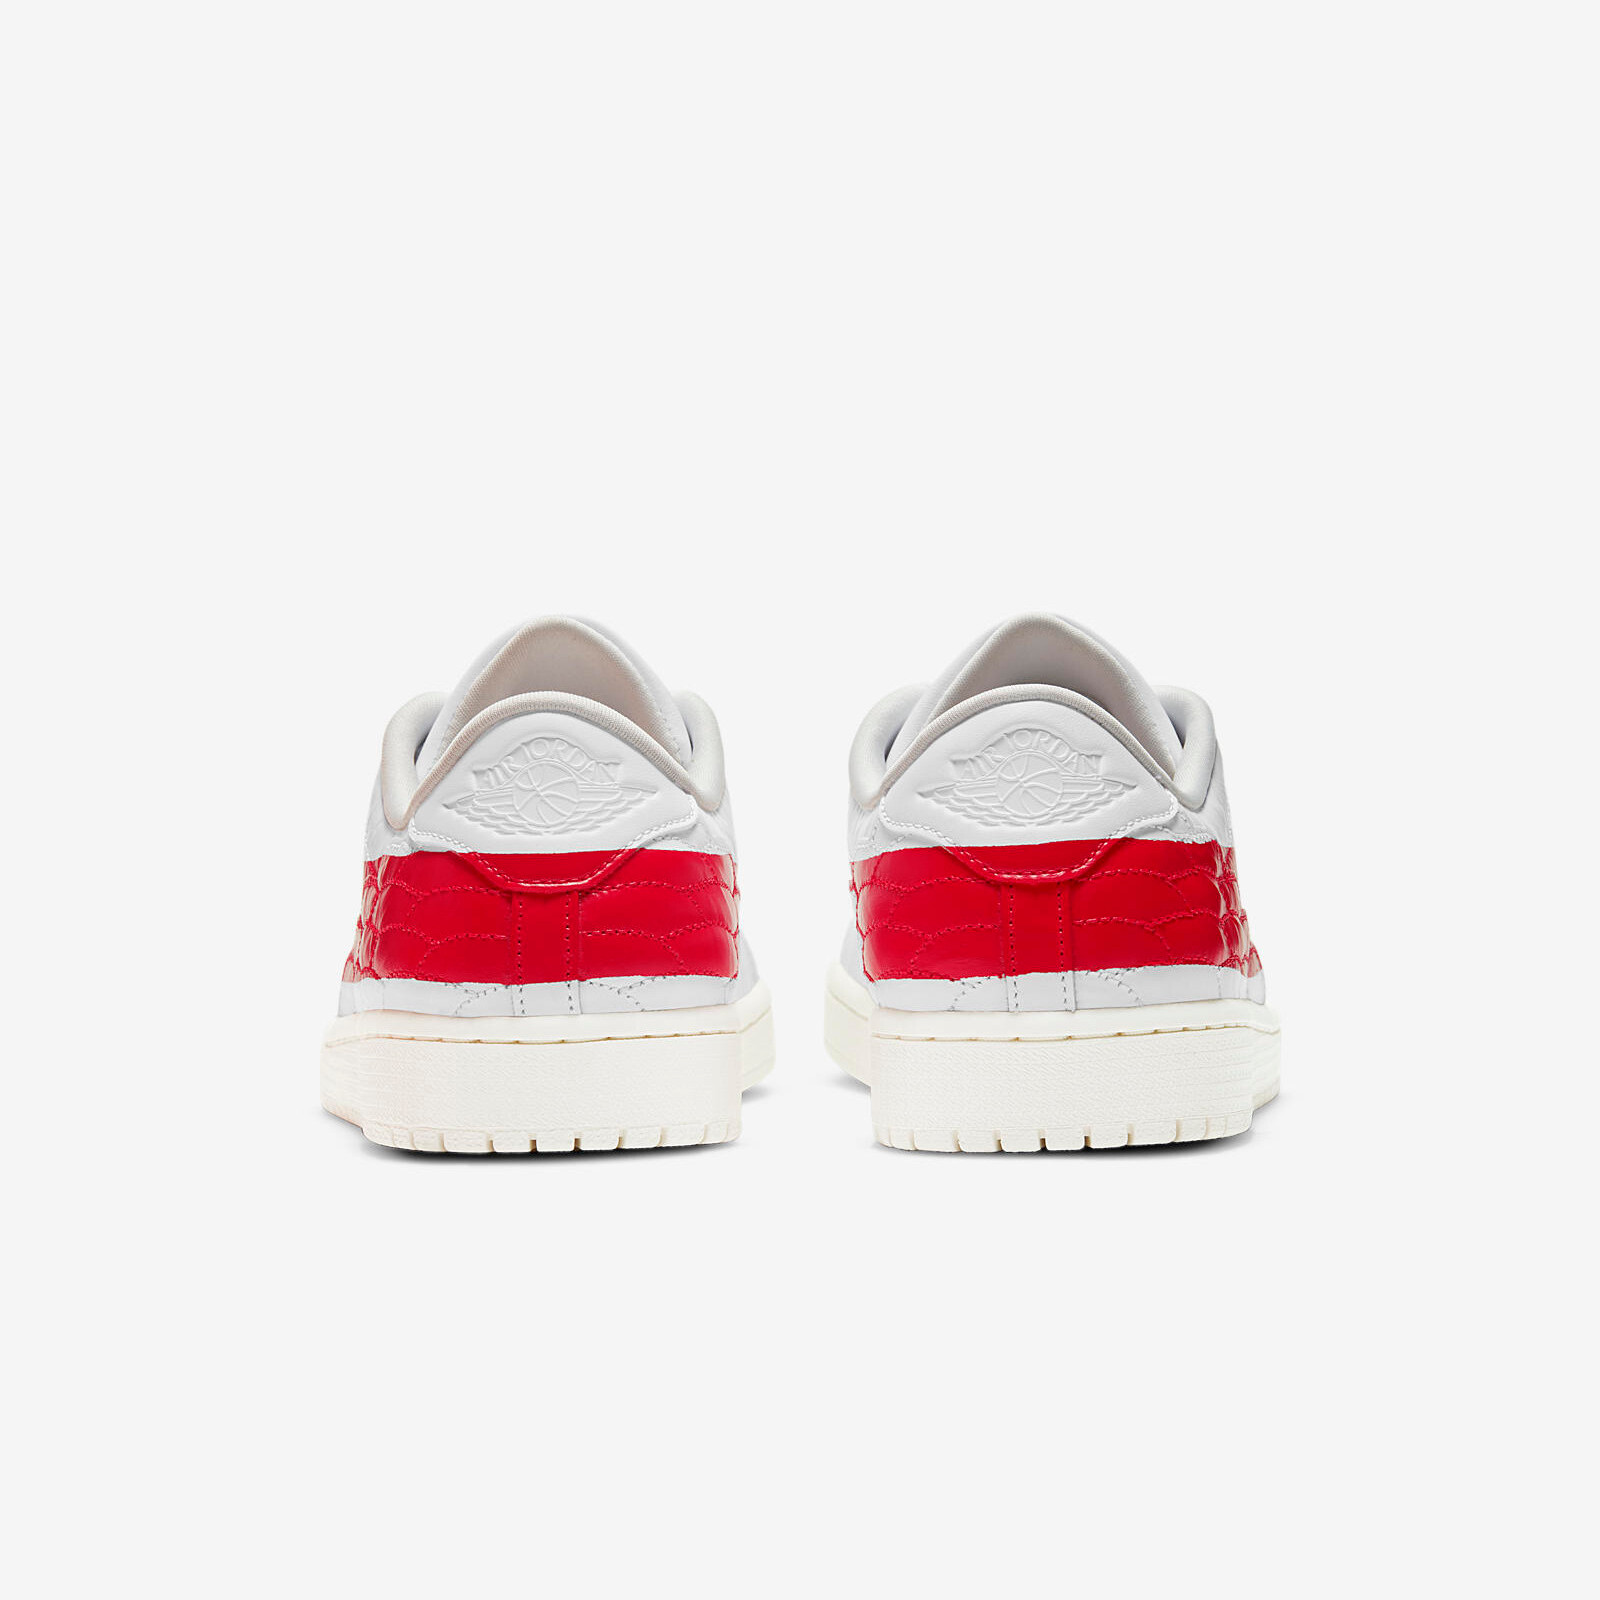 Air Jordan 1 Centre Court
White / Red